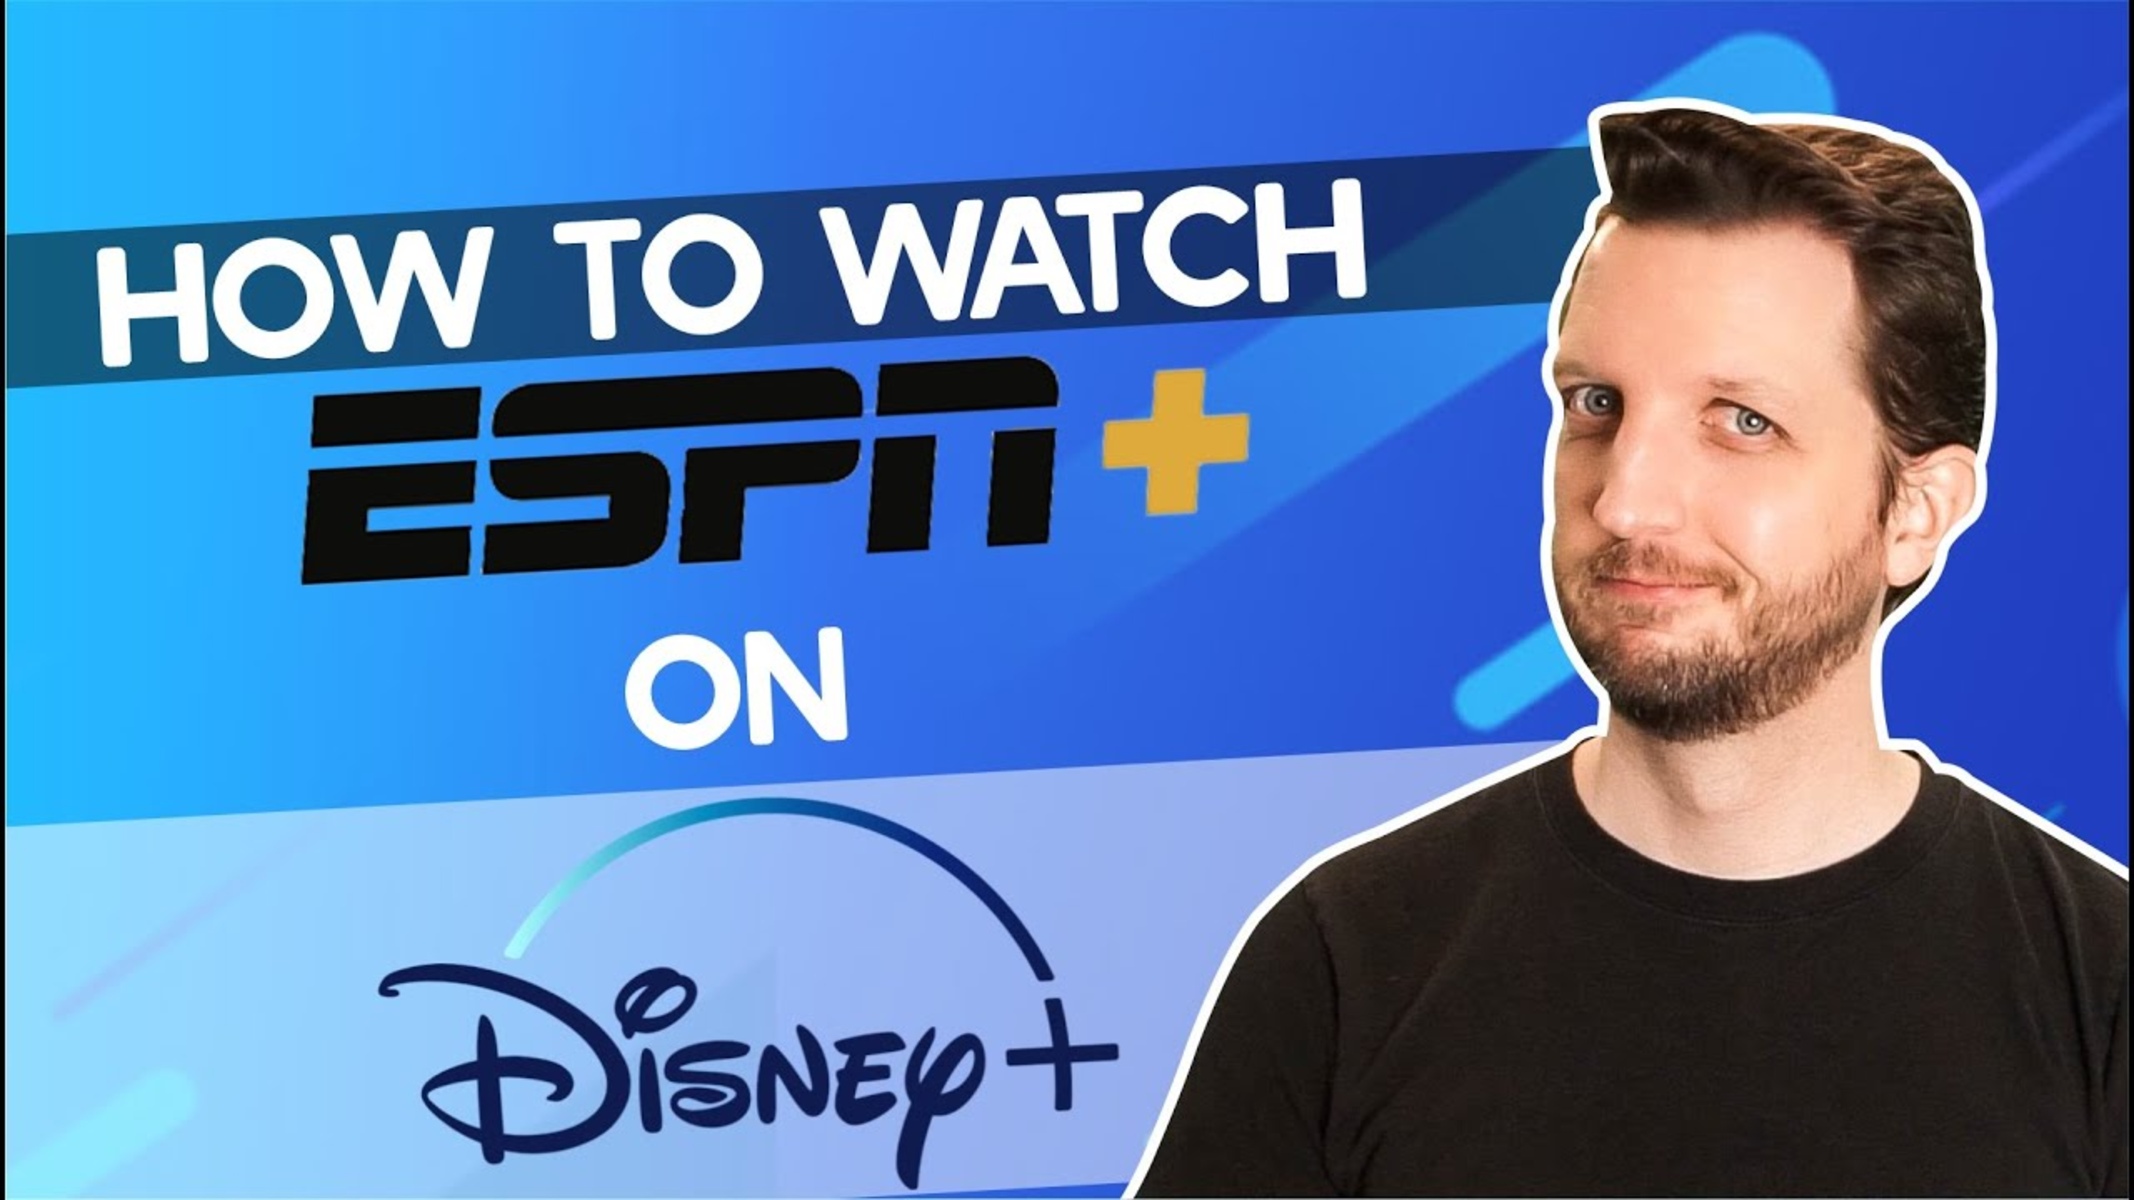 How To Watch Espn With Disney Plus